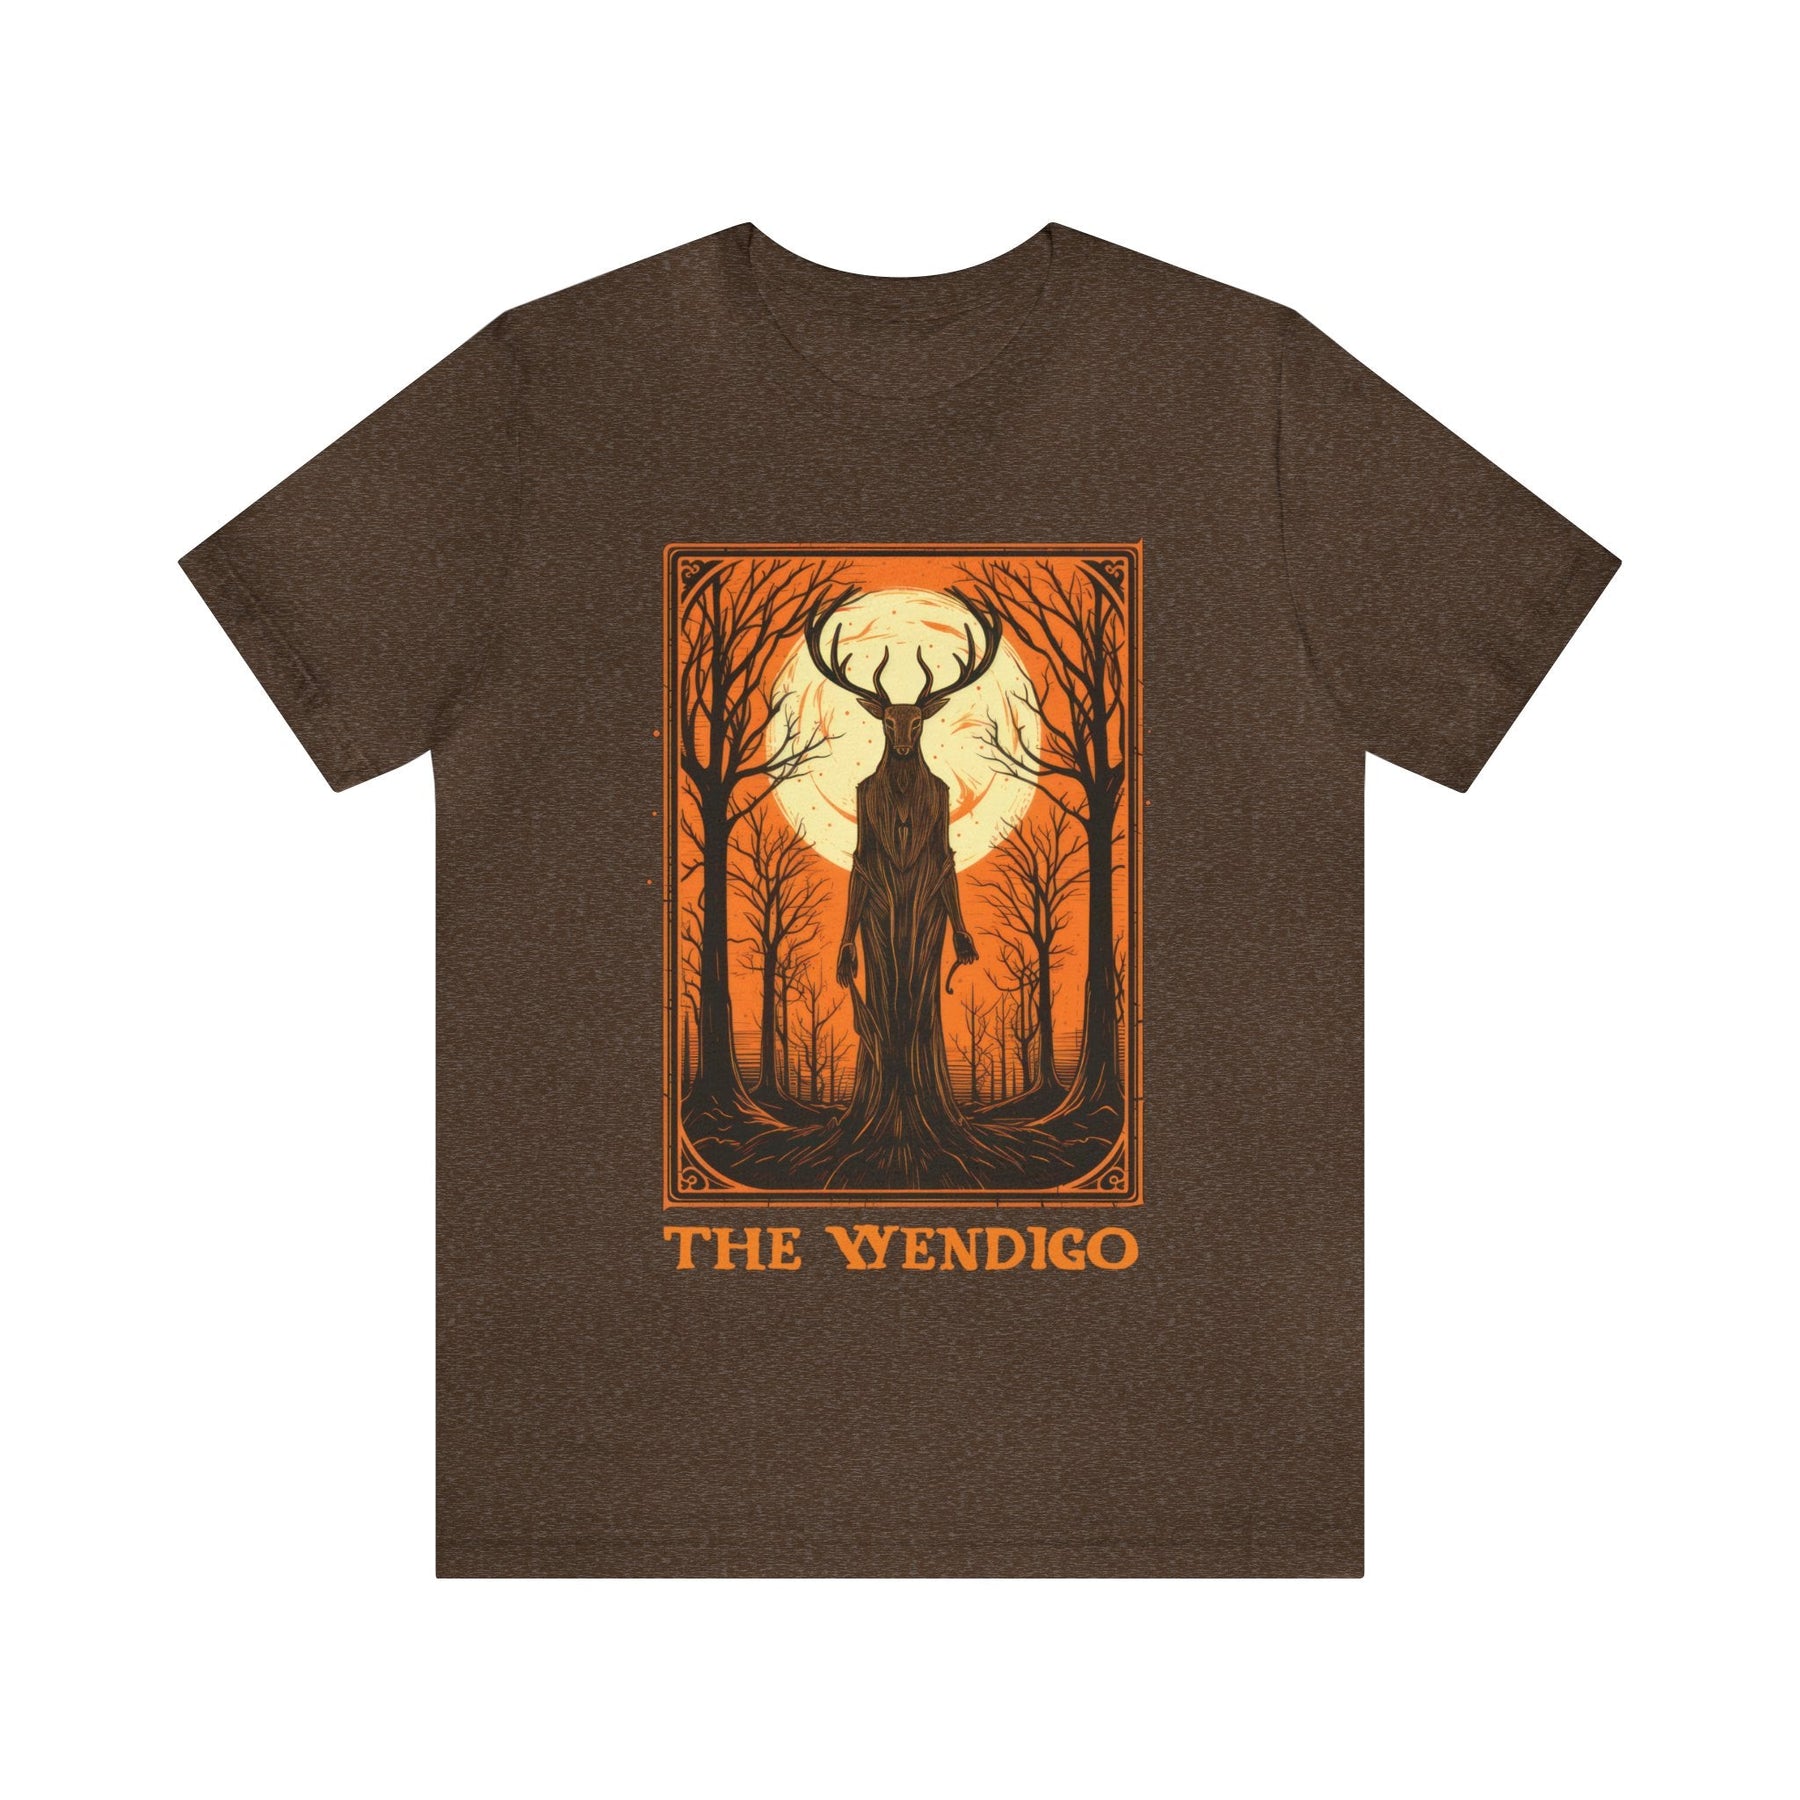 Wendigo Tarot Card T-Shirt - Goth Cloth Co.T-Shirt13557469179498213121